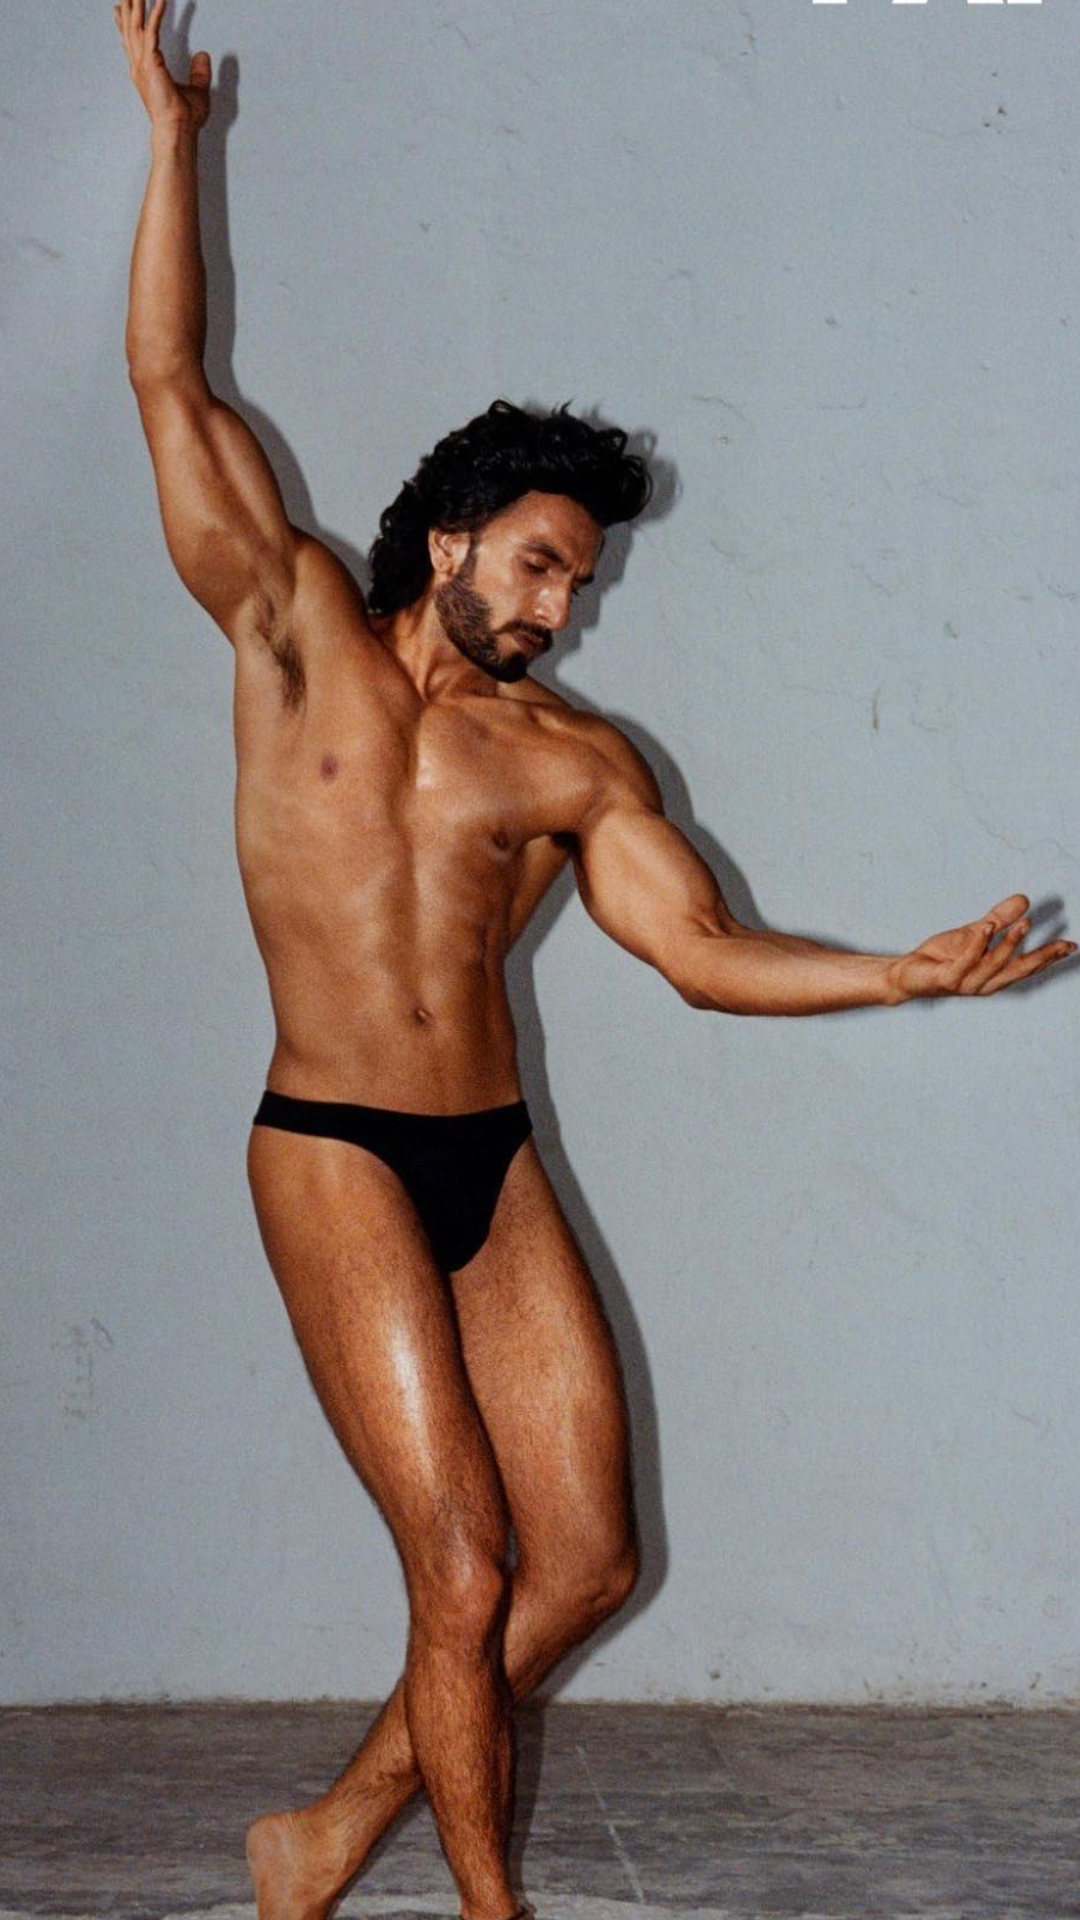 Ranveer Singh posed nude for Paper magazine as he paid tribute to Burt Reynolds. 